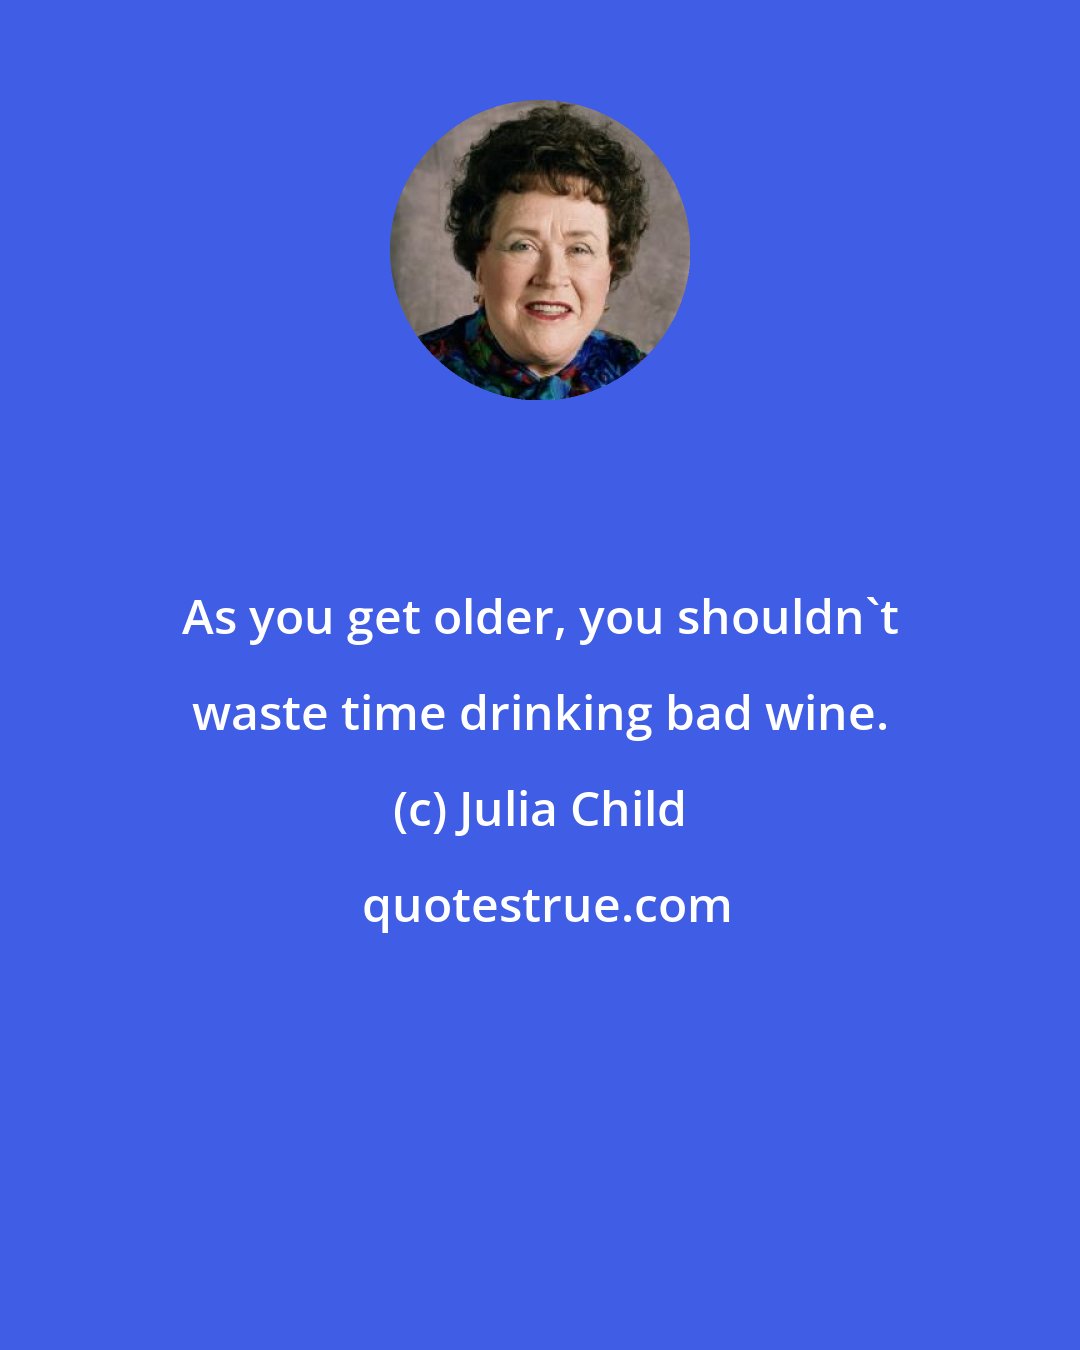 Julia Child: As you get older, you shouldn't waste time drinking bad wine.